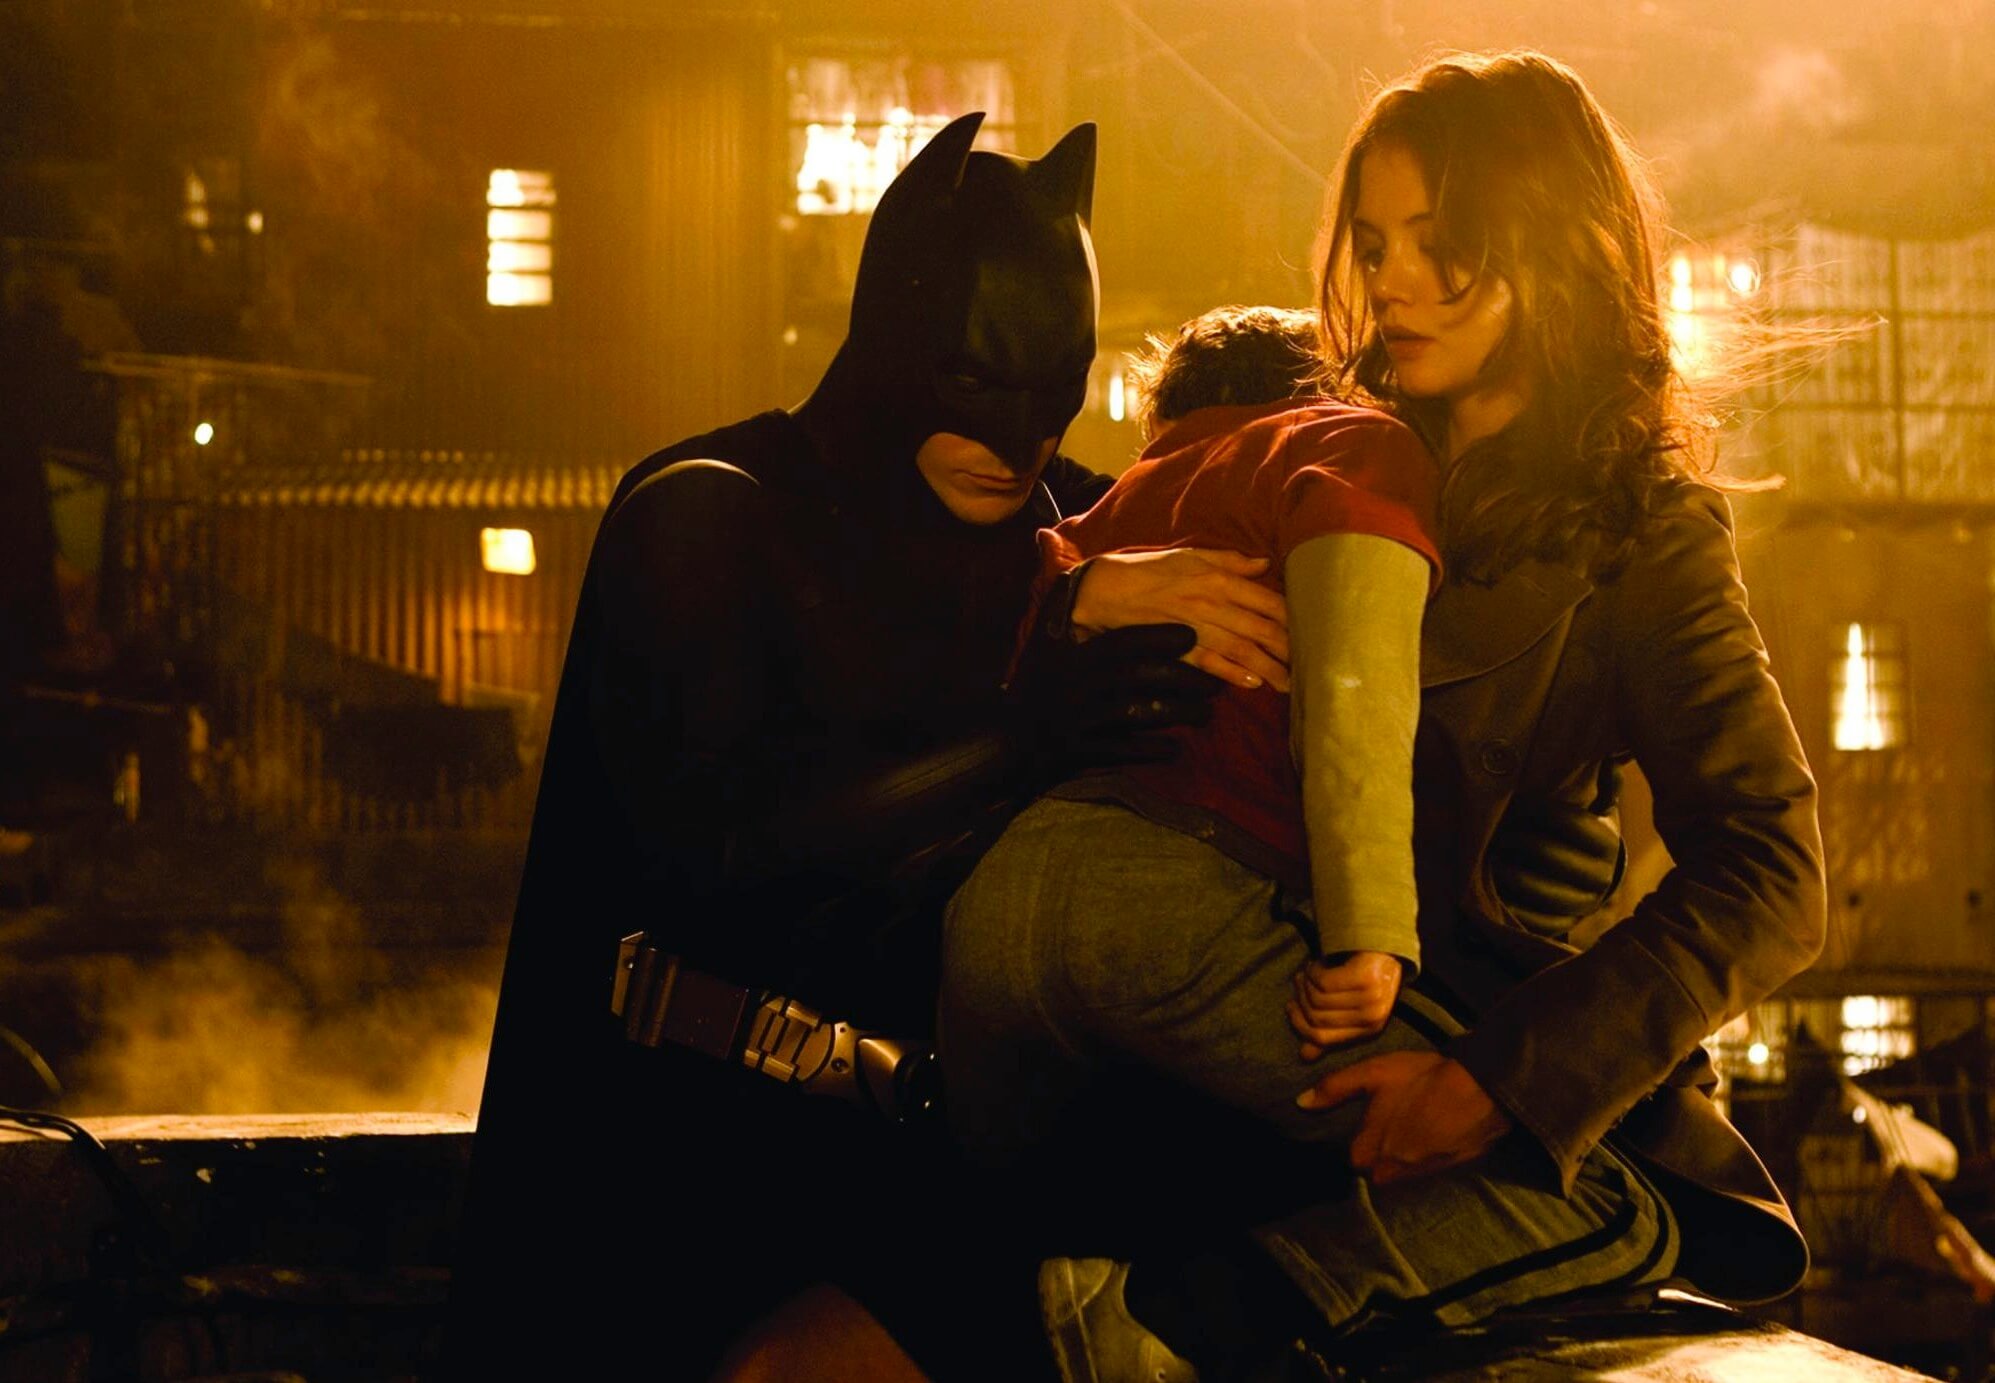 Batman Begins [2005] by Christopher Nolan - Movie Summary